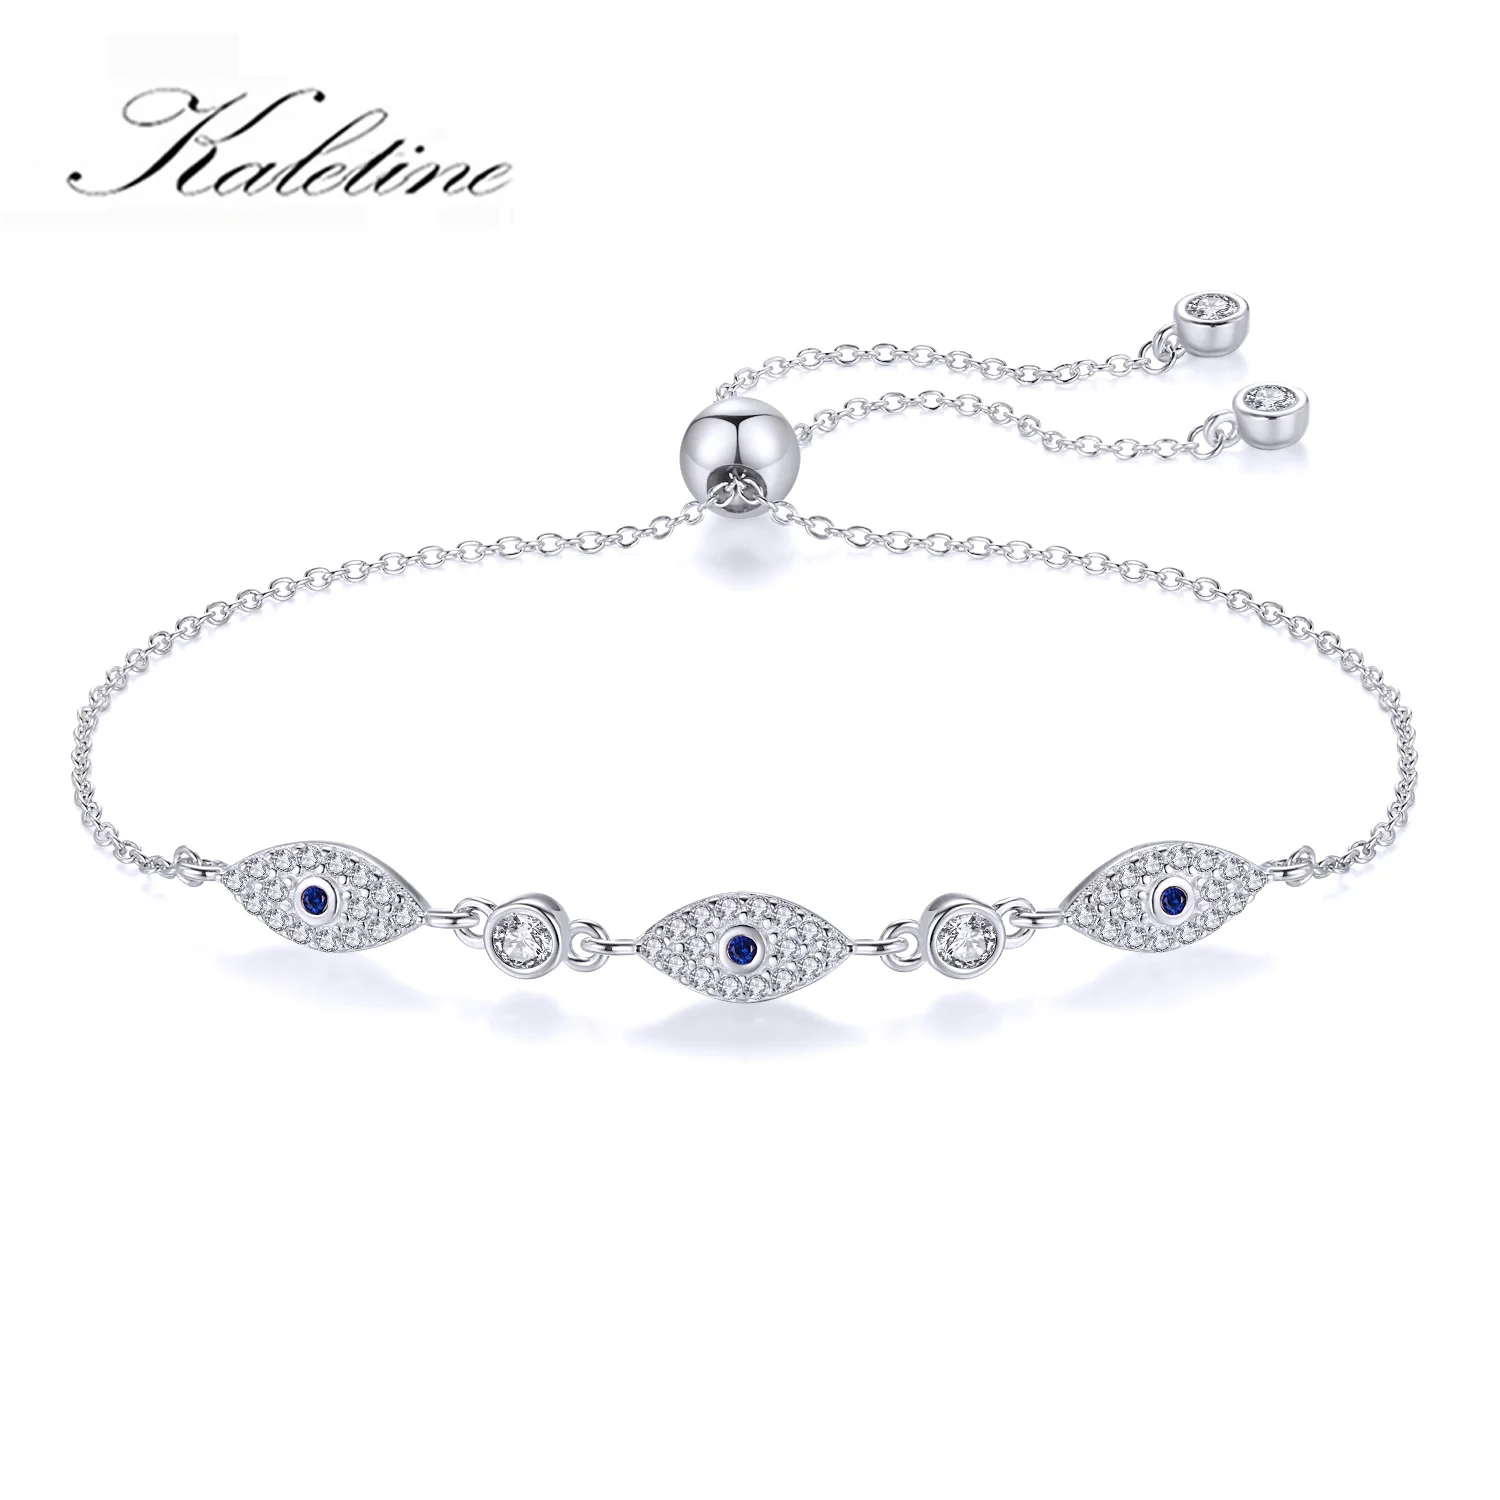 

KALETINE Evil Eye 925 Sterling Silver Bracelet Nazar Boncuk Charm Blue Stone Bracelet & Bangle for Women Female Jewelry Gifts